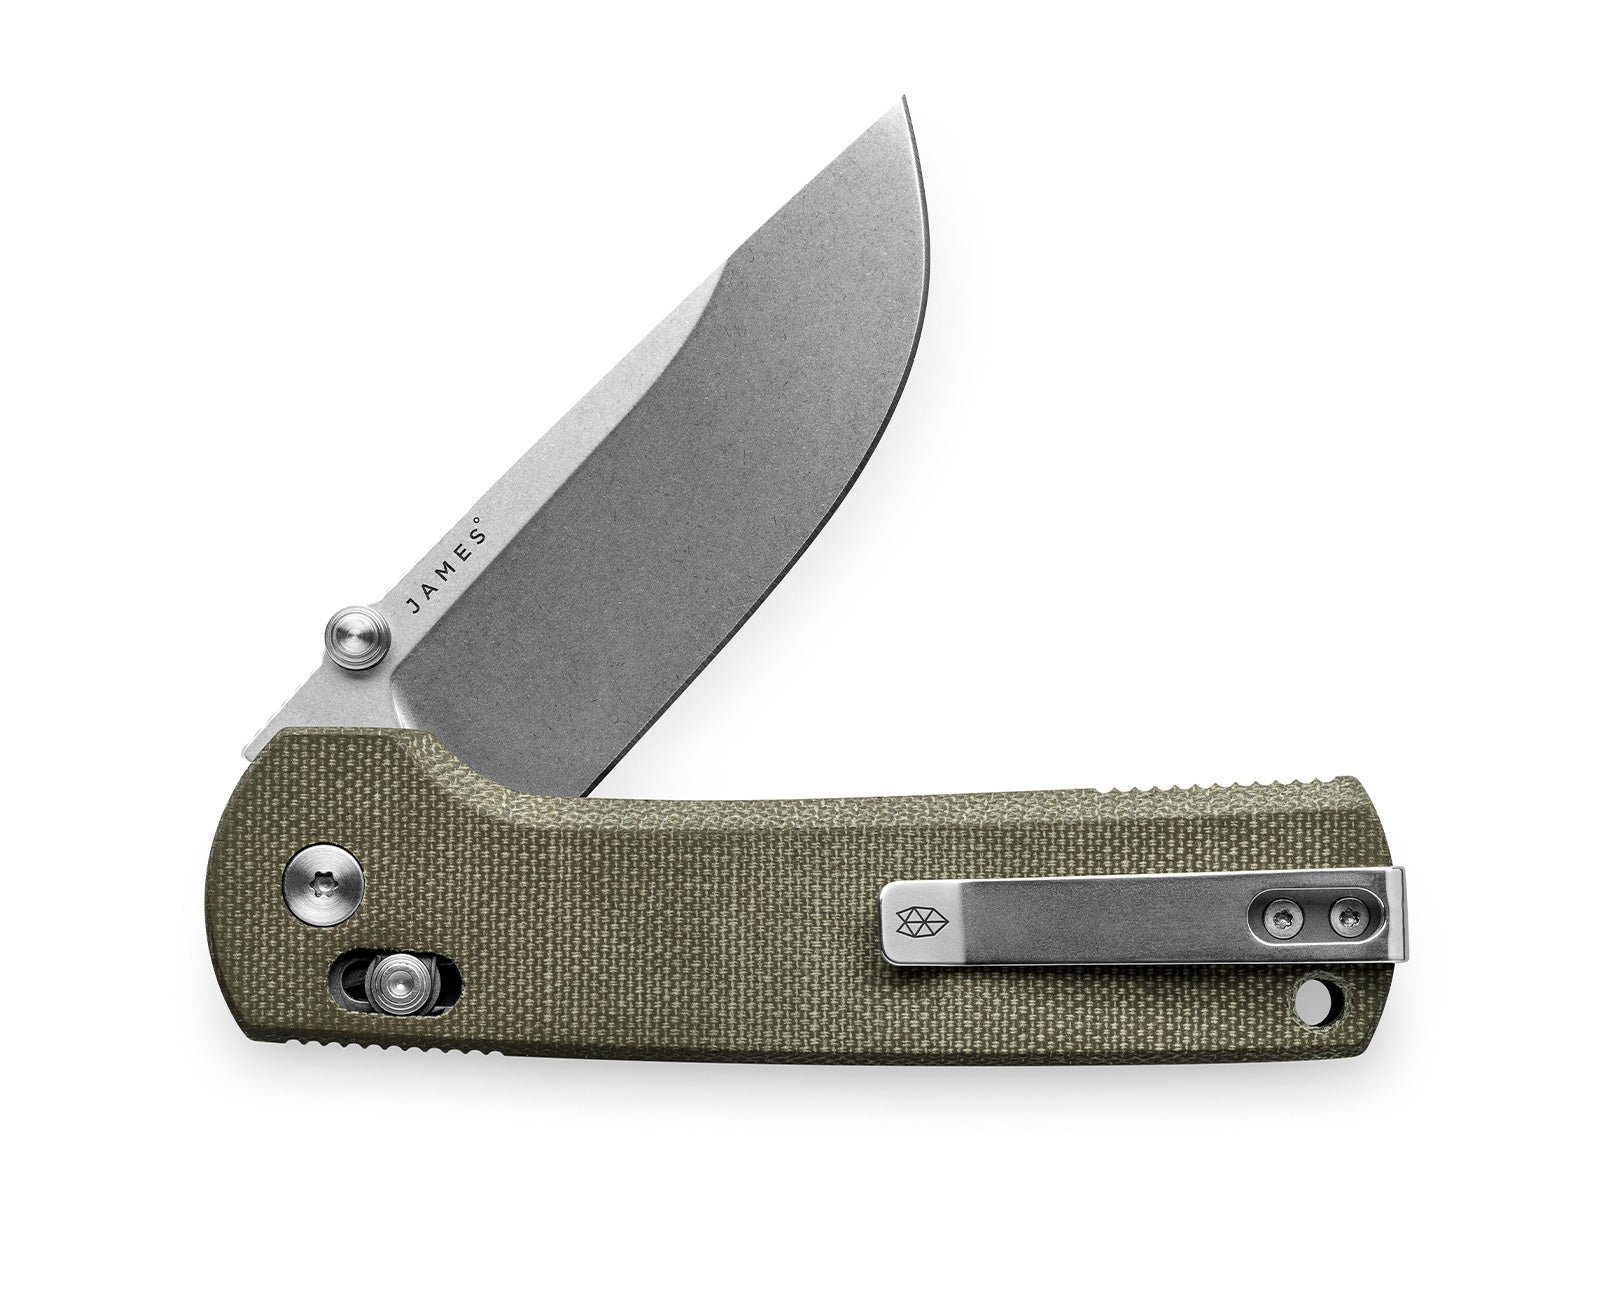 The Kline - EDC MagnaCut Pocket Knife